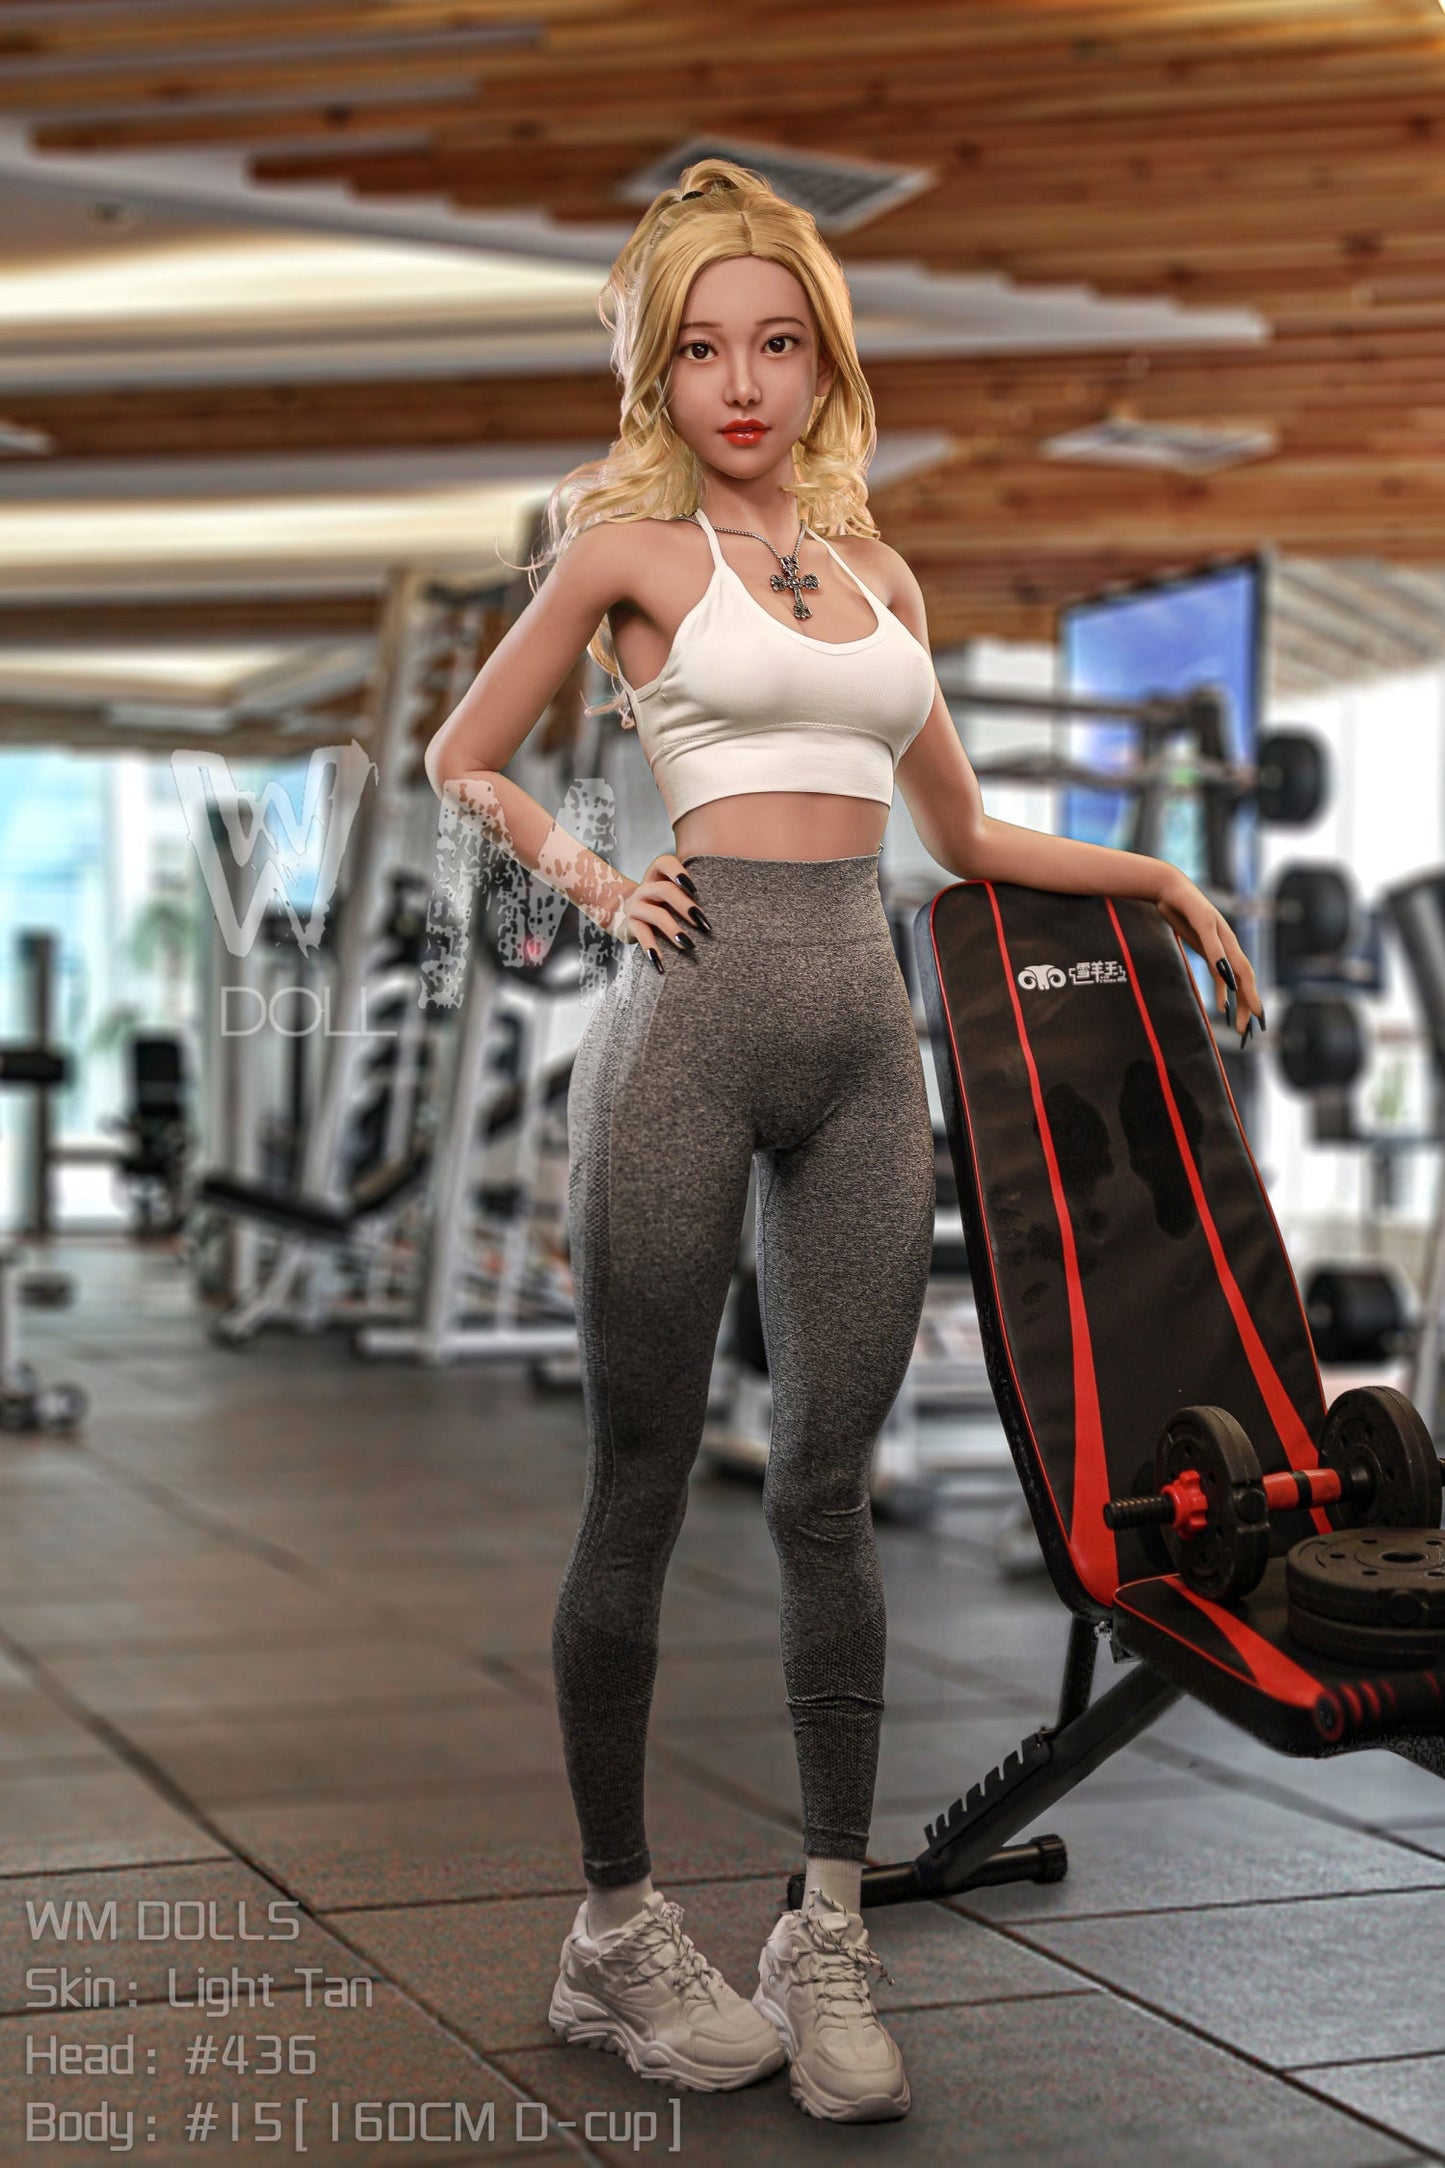 Esra - 160cm D-cup + #436 Slim girl sex doll in the gym by Anmodolls